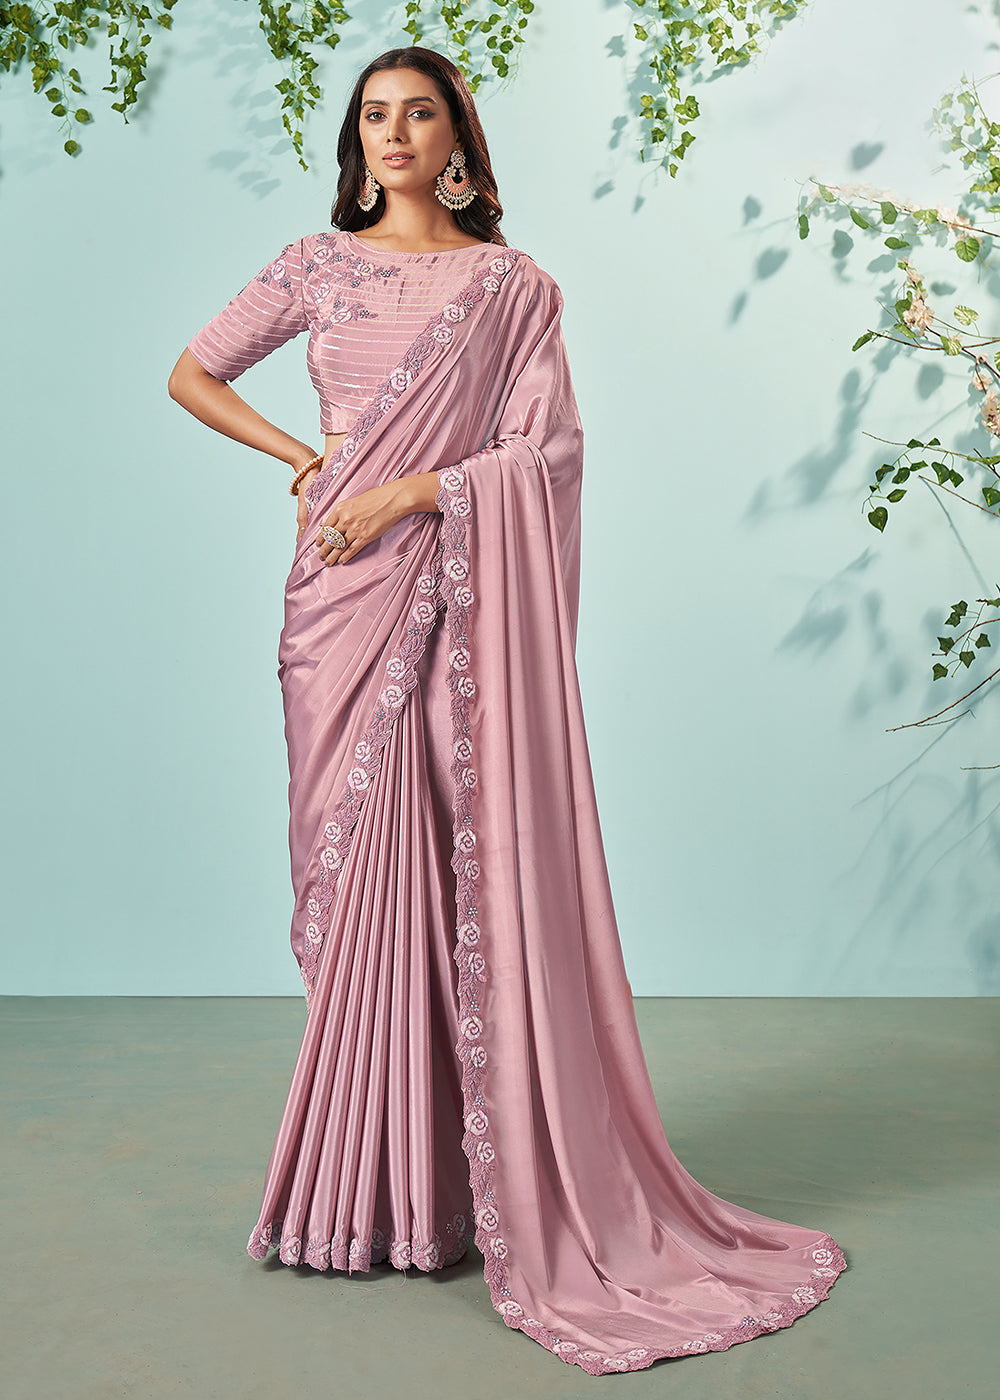 Buy Classic Designer Saree this Diwali Online in USA, UK & Canada at Empress